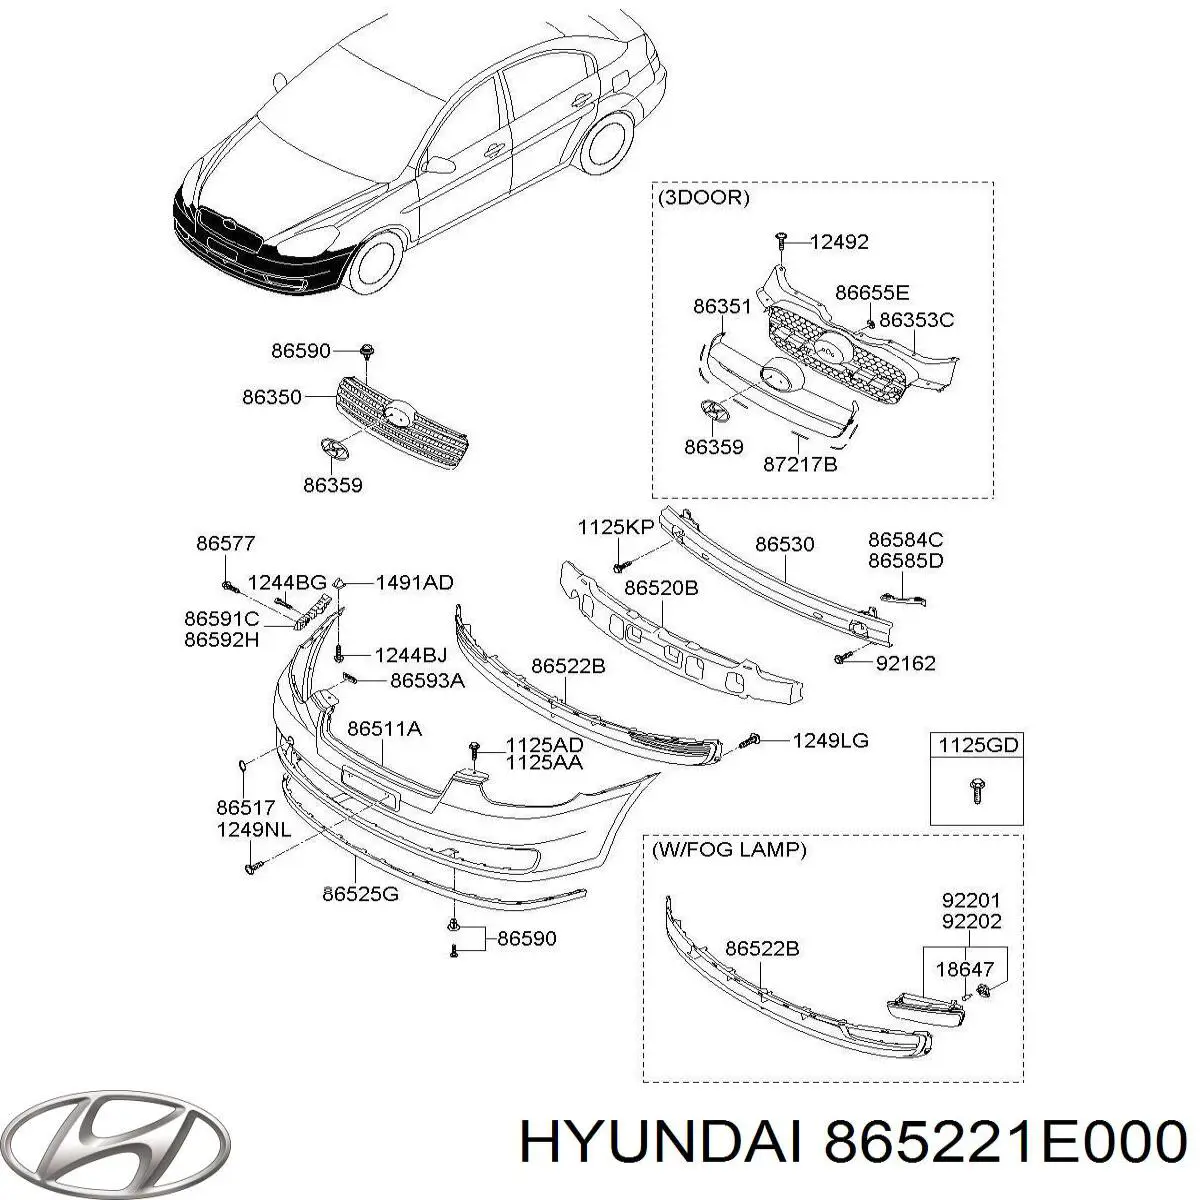 865221E000 Hyundai/Kia rejilla de ventilación, parachoques delantero